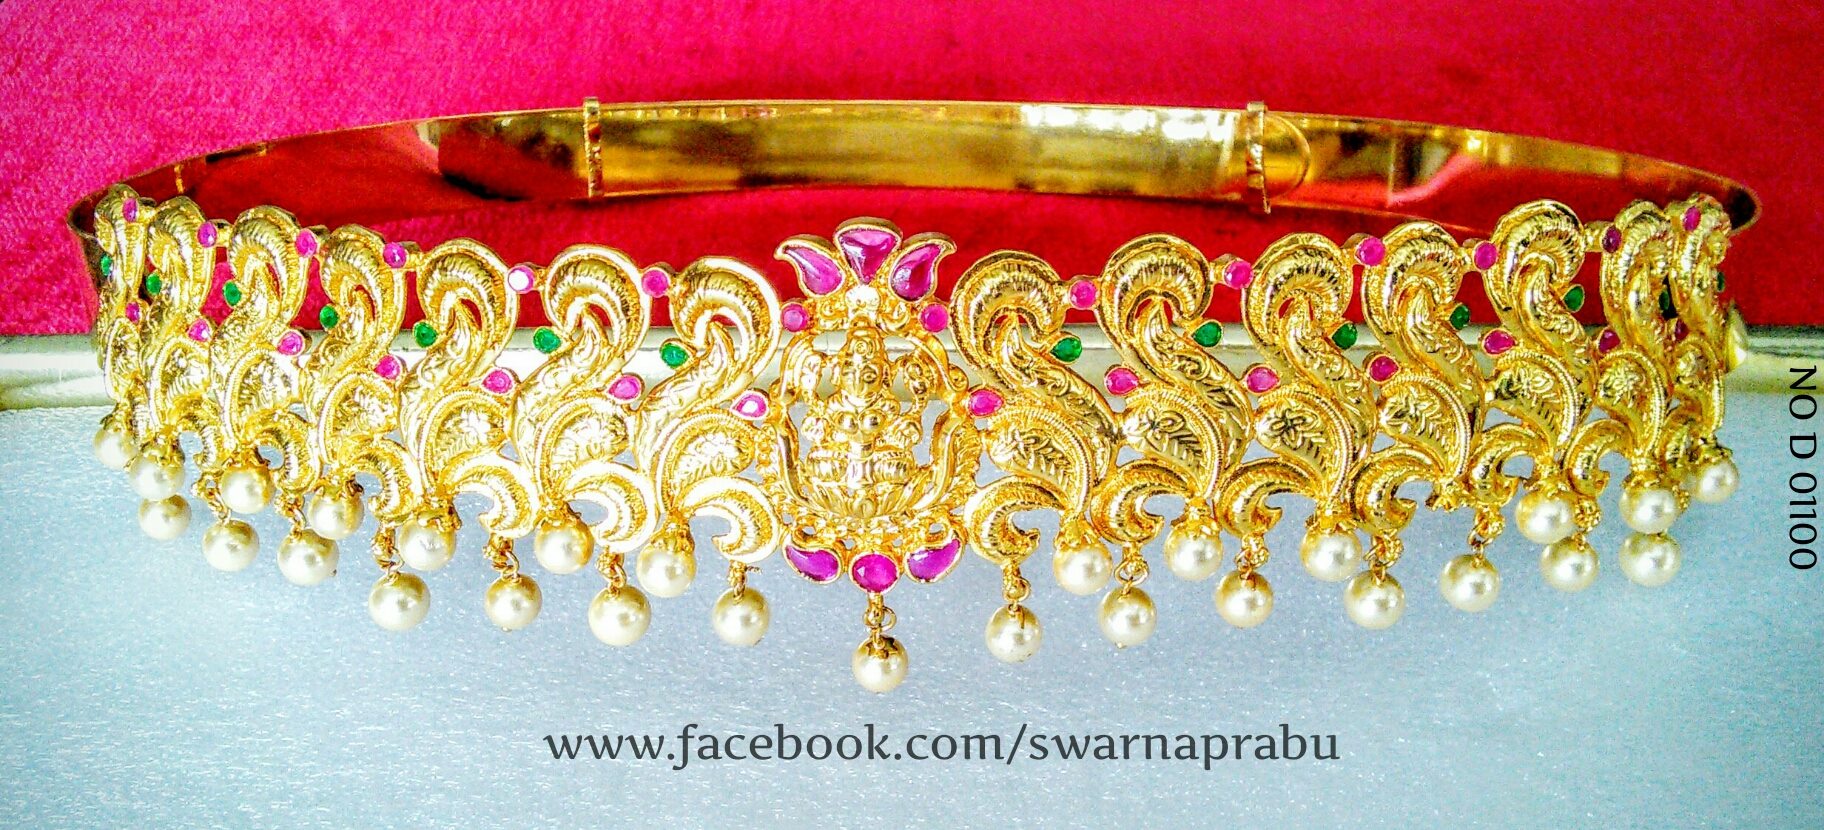  Sri swarna prabhu jewellery-img4